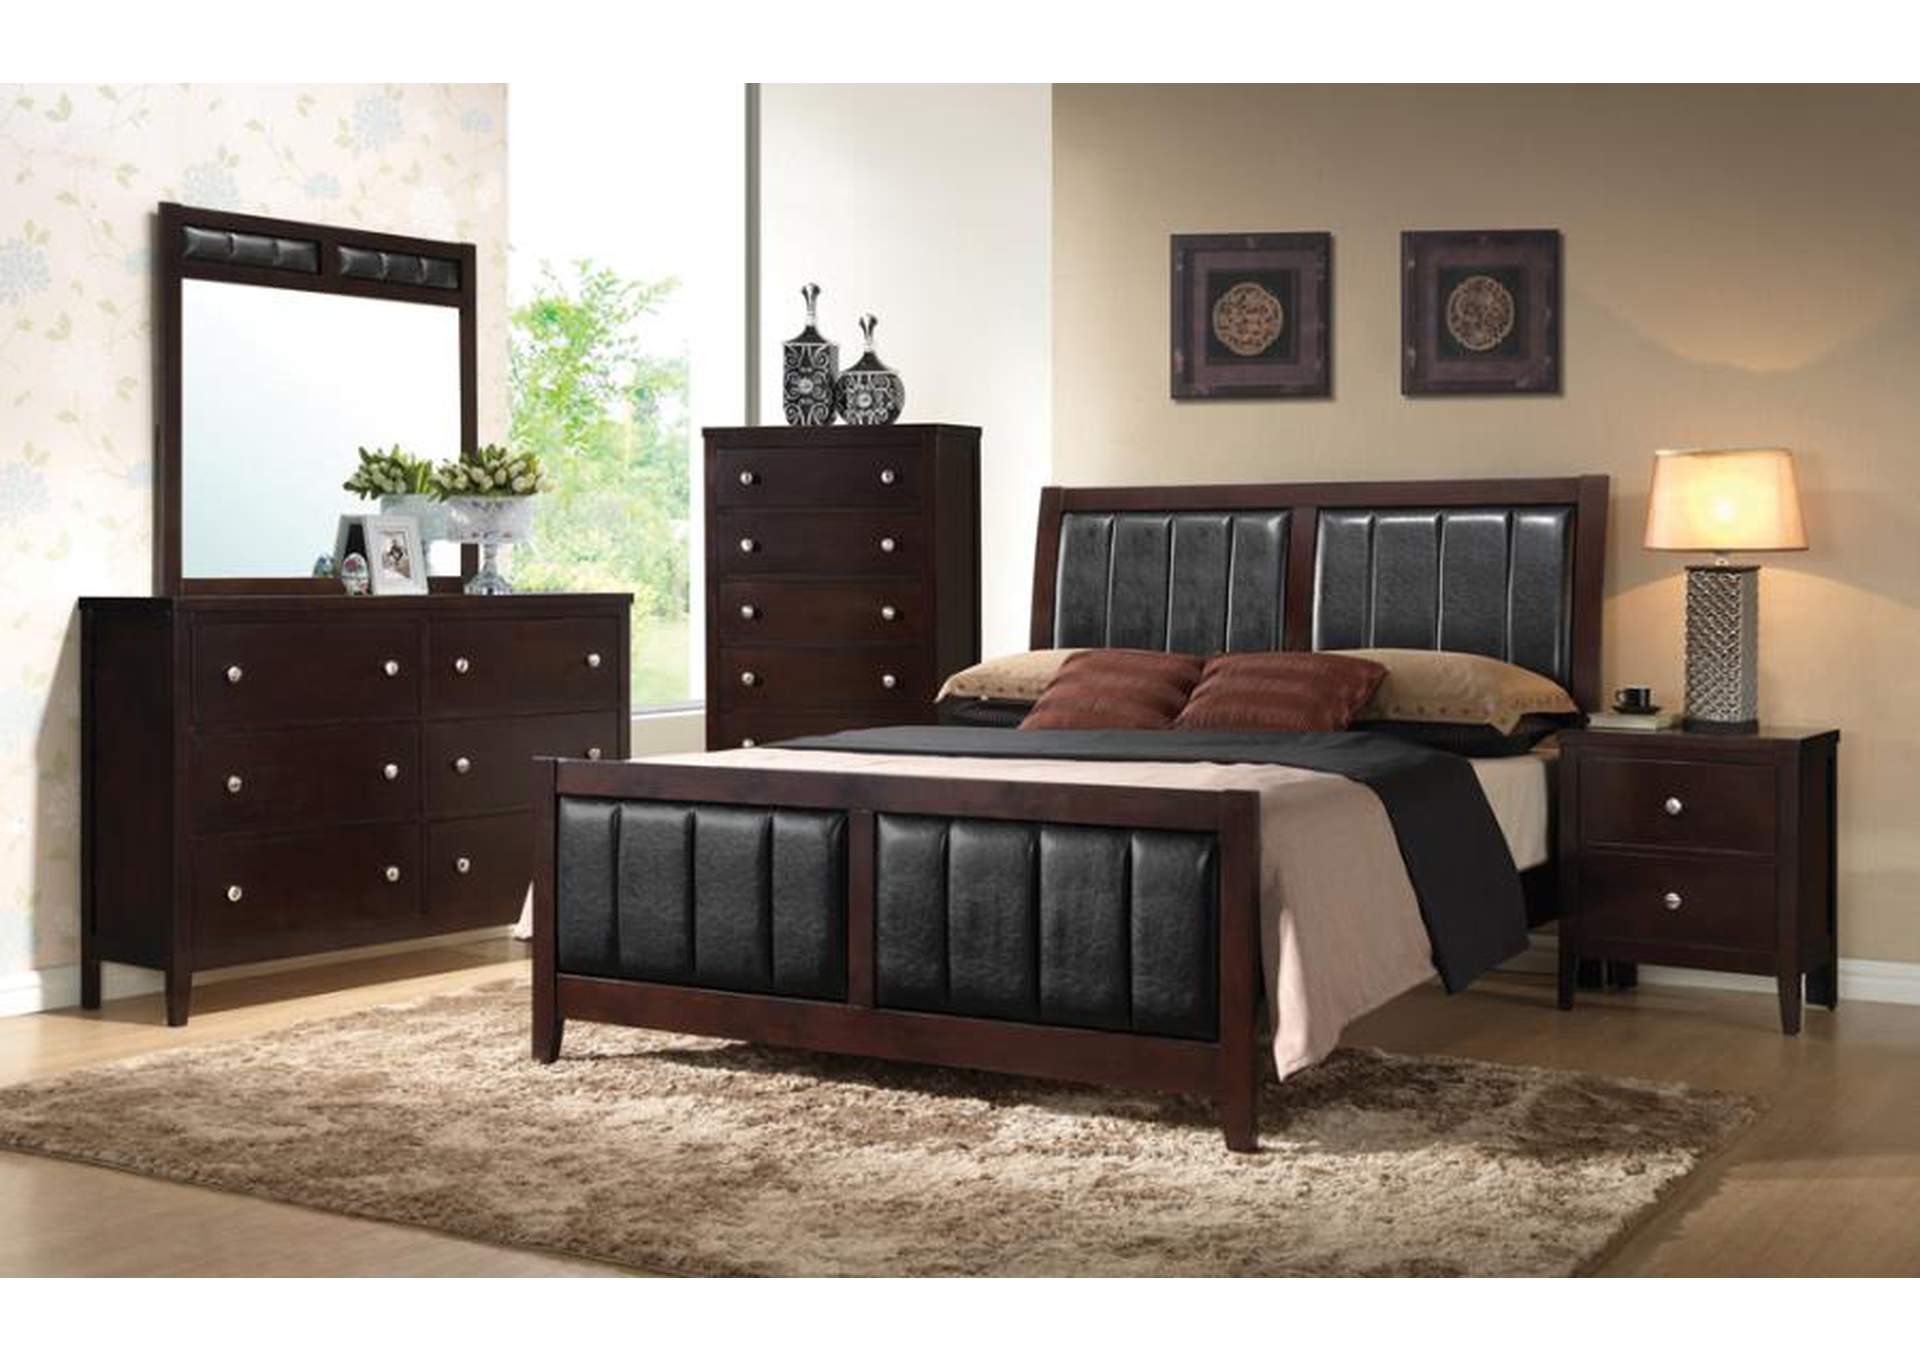 Full Bed 3 Pc Set,Coaster Furniture